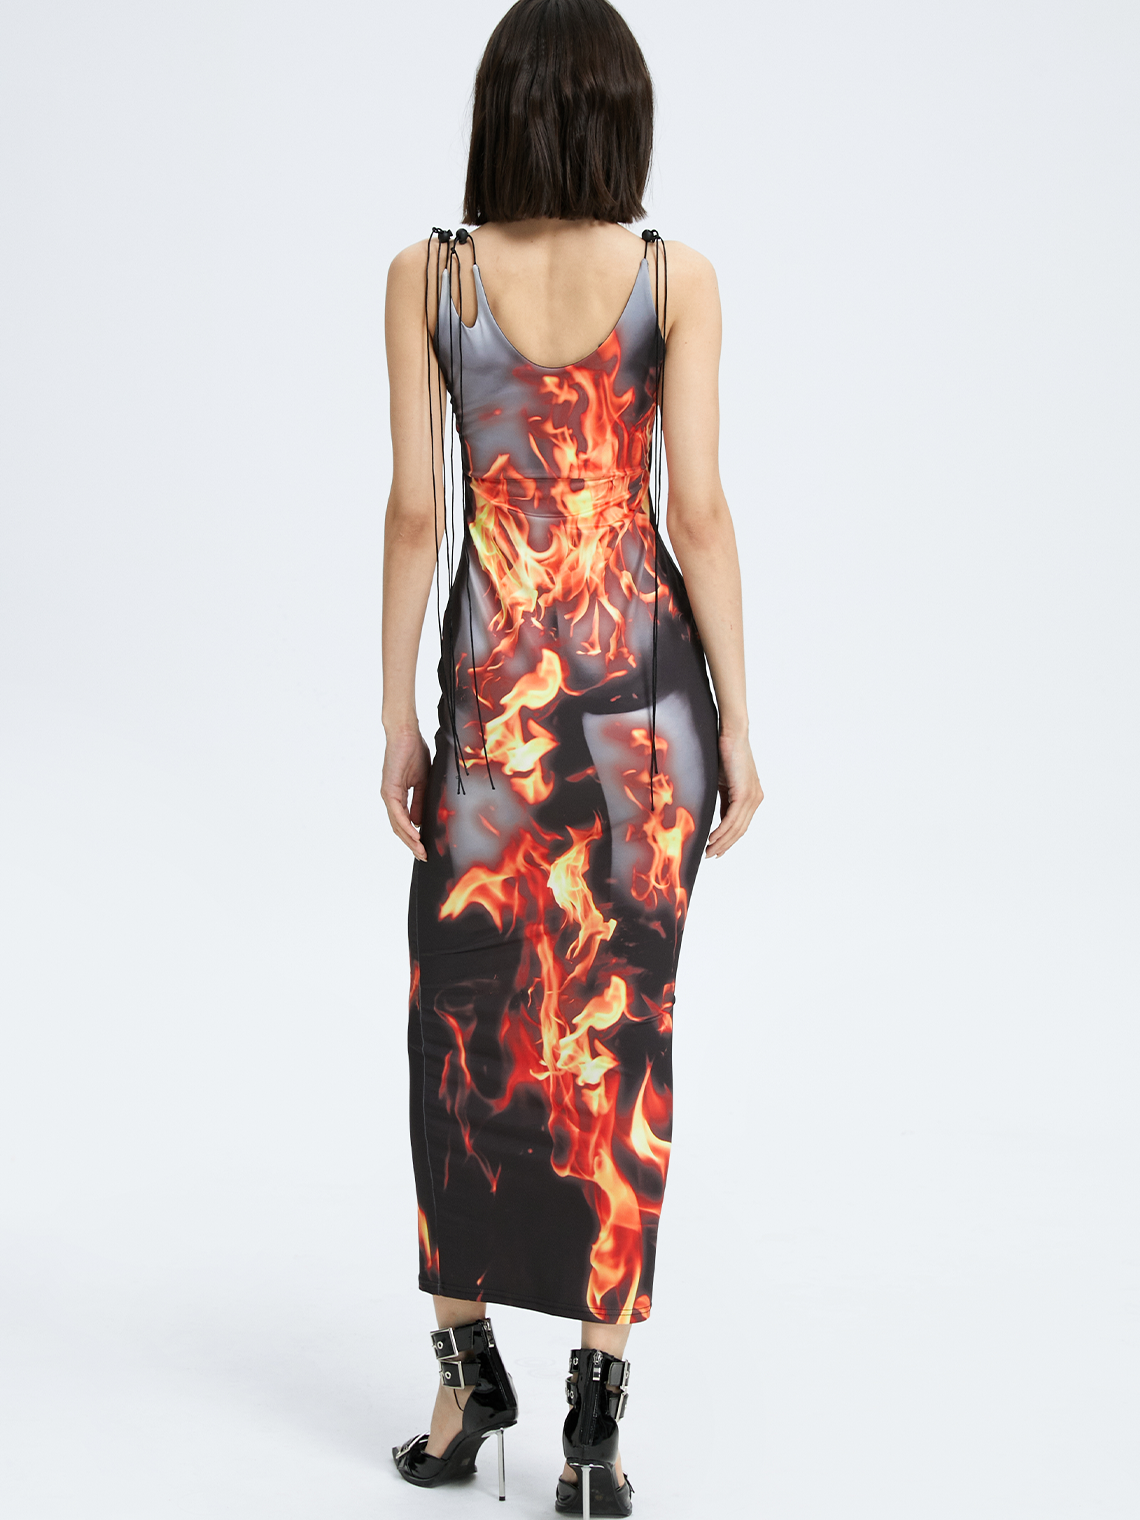 Edgy Gray Body print Asymmetrical design Dress Midi Dress